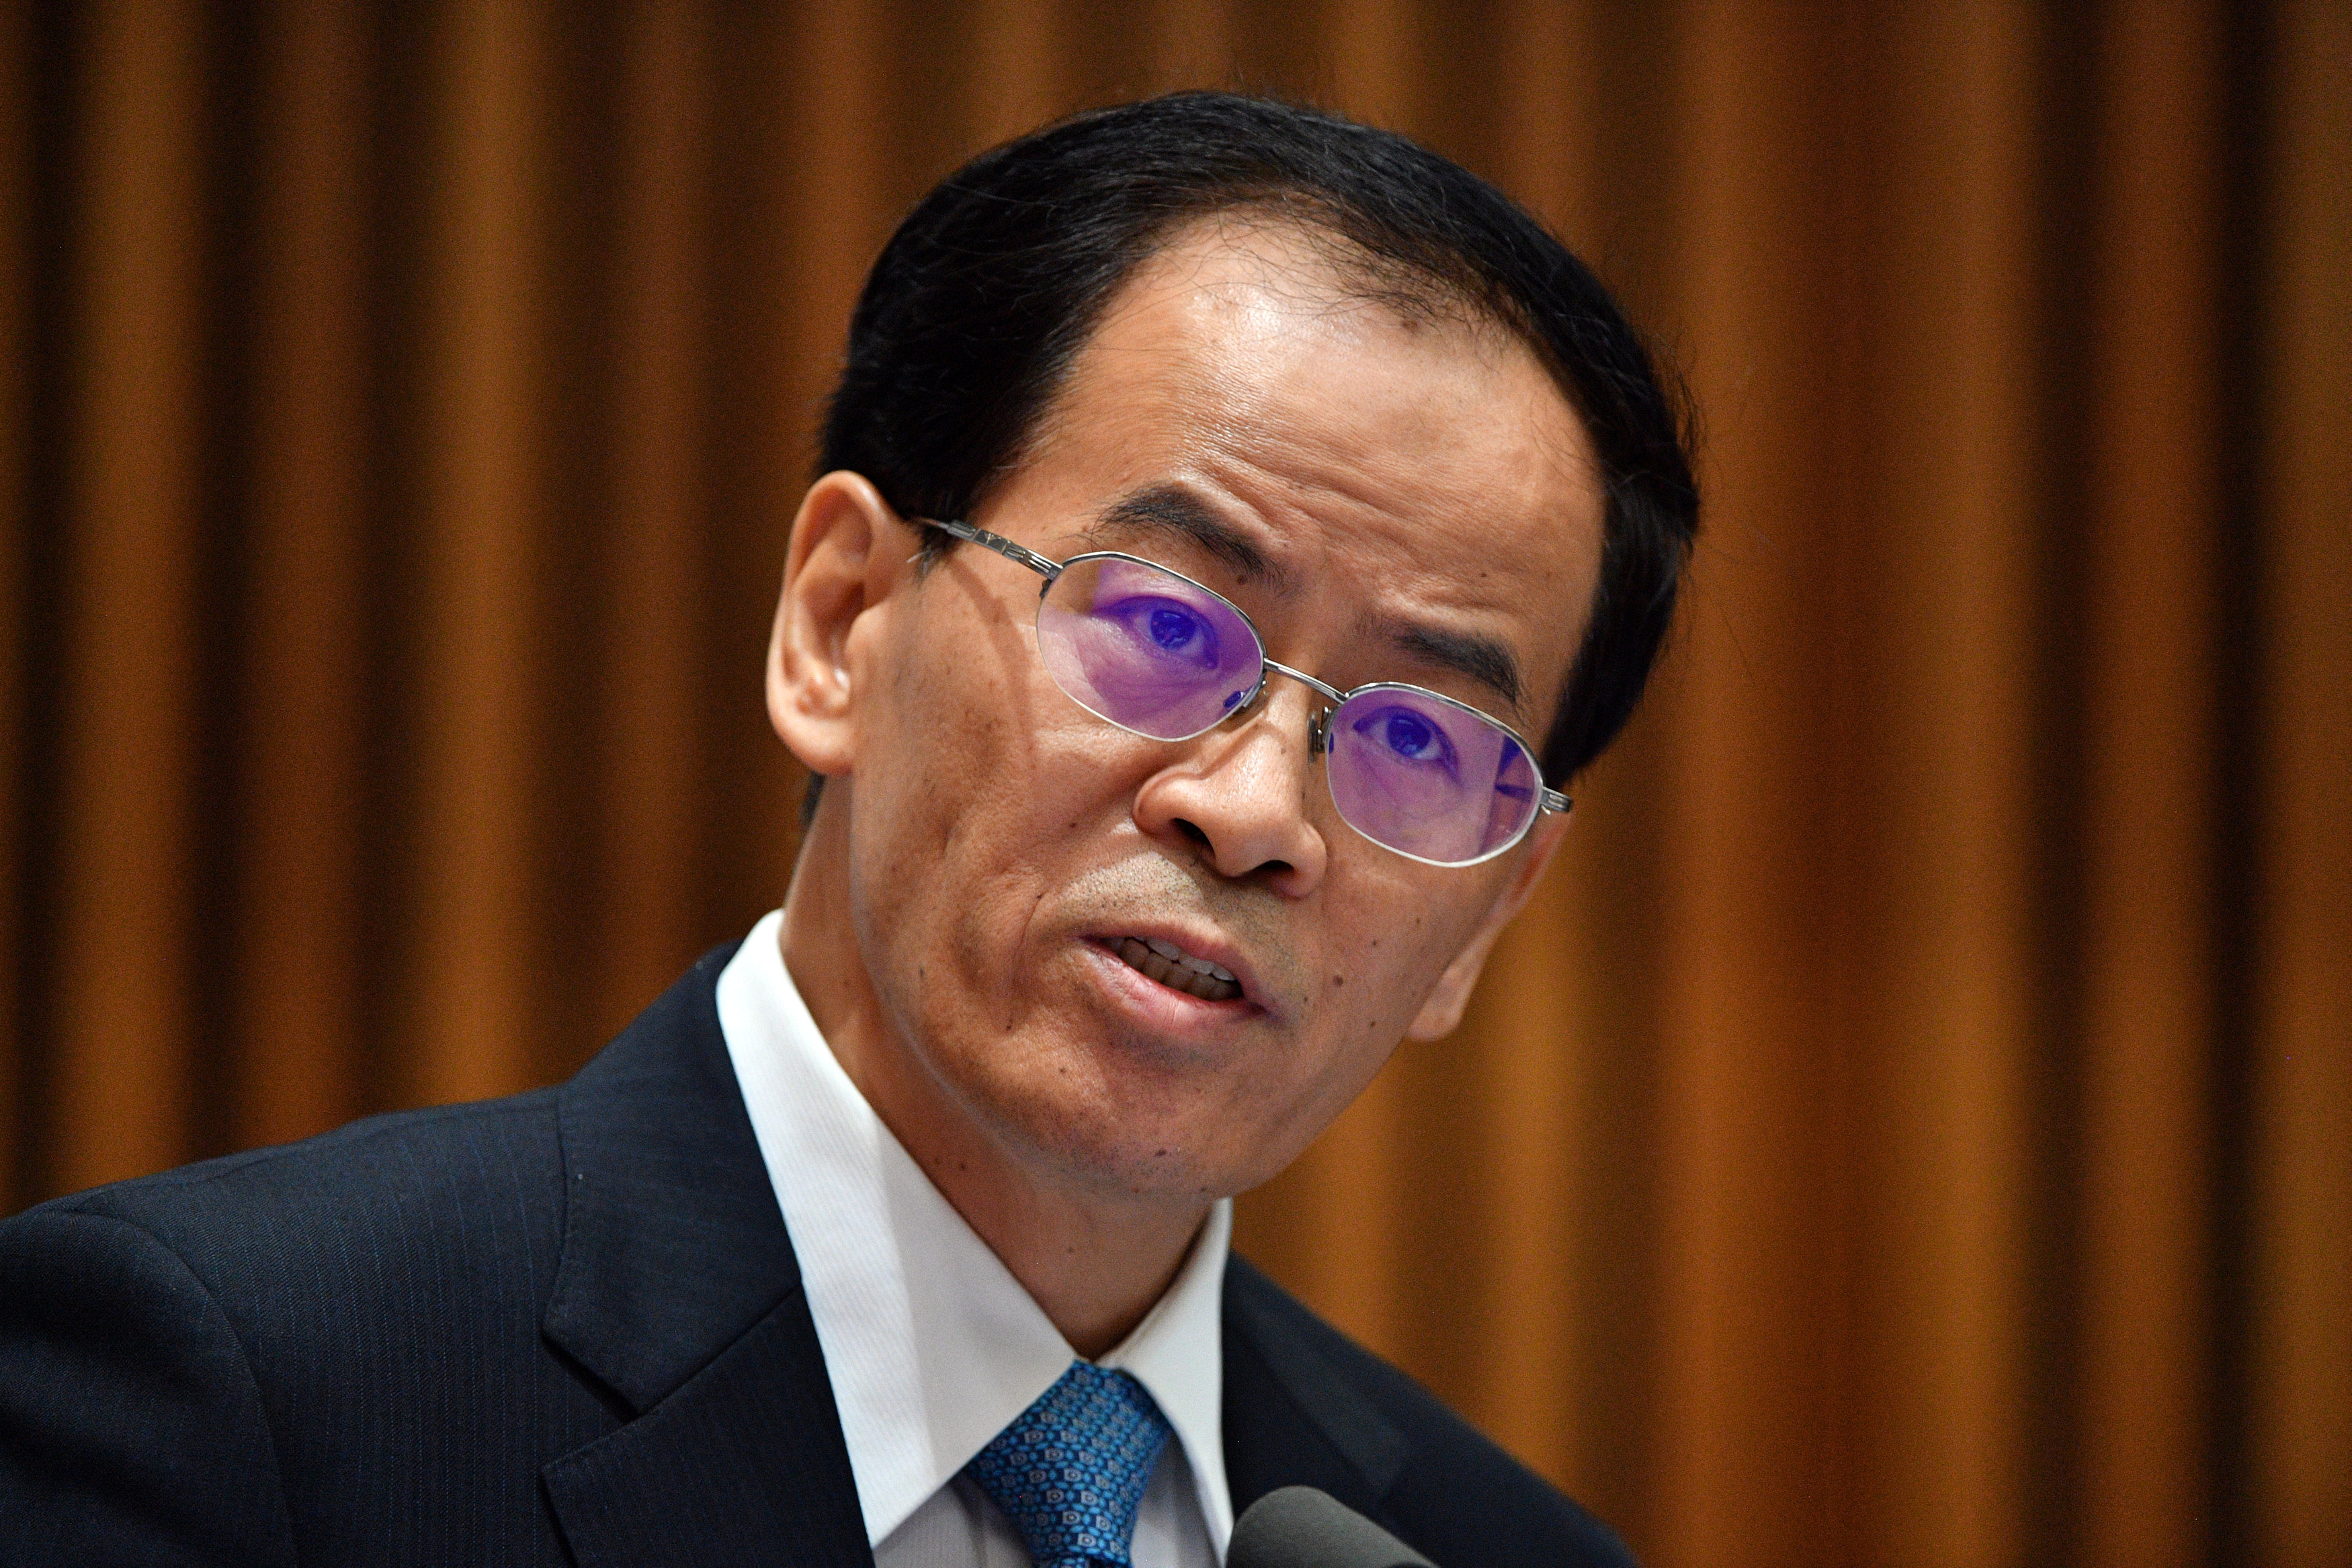 Chinese ambassador calls on Australia to drop 'Cold War mentality'